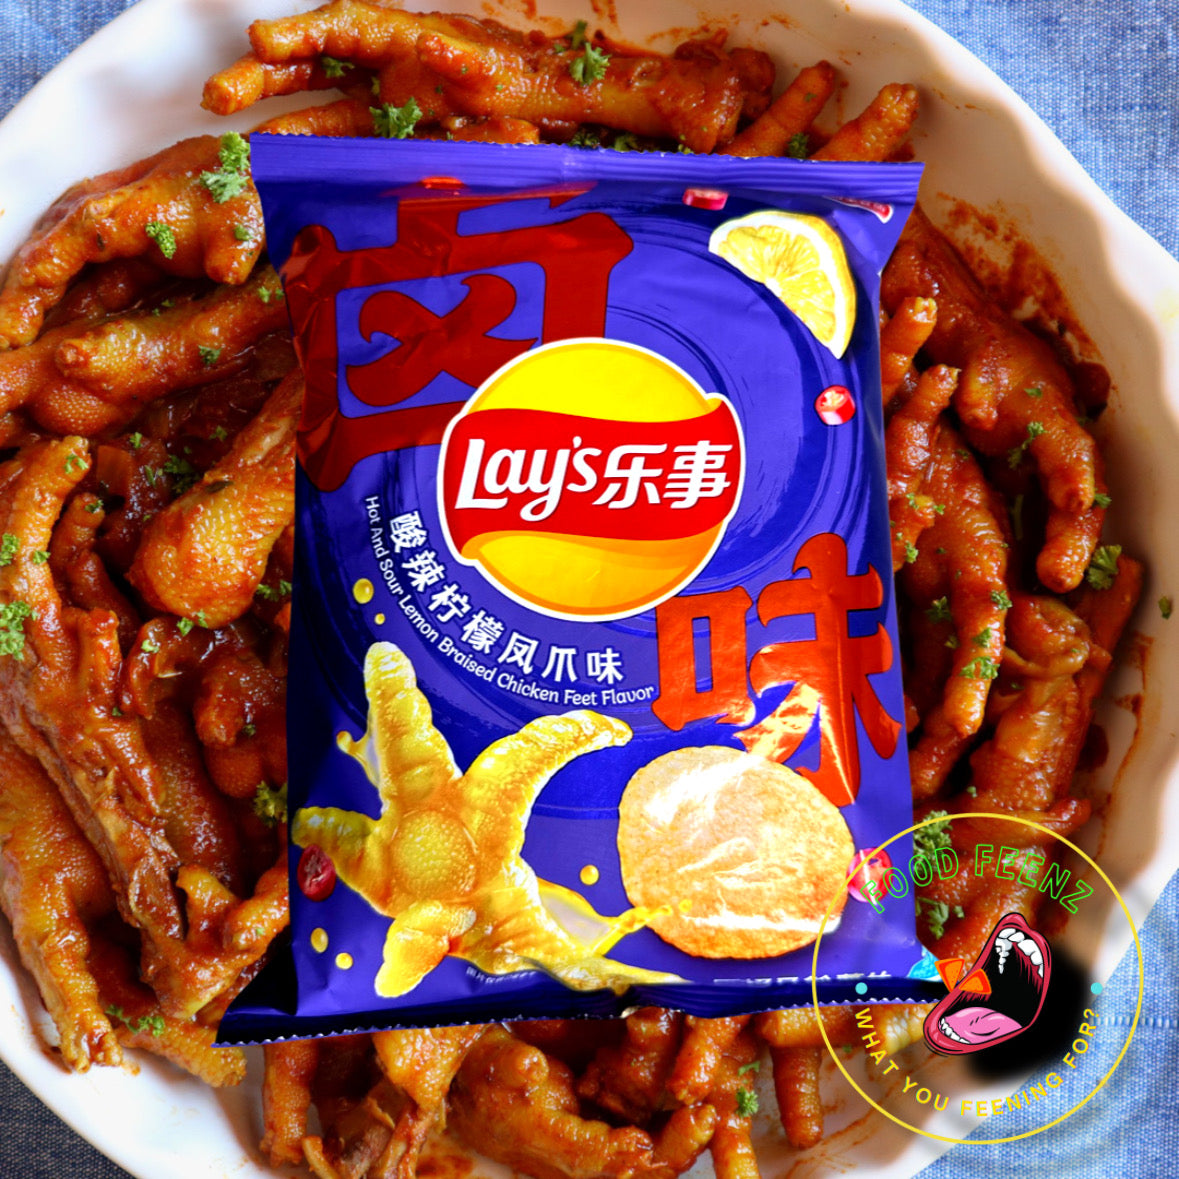 Lay's Hot & Sour Lemon Braised Chicken Feet Flavor (China)